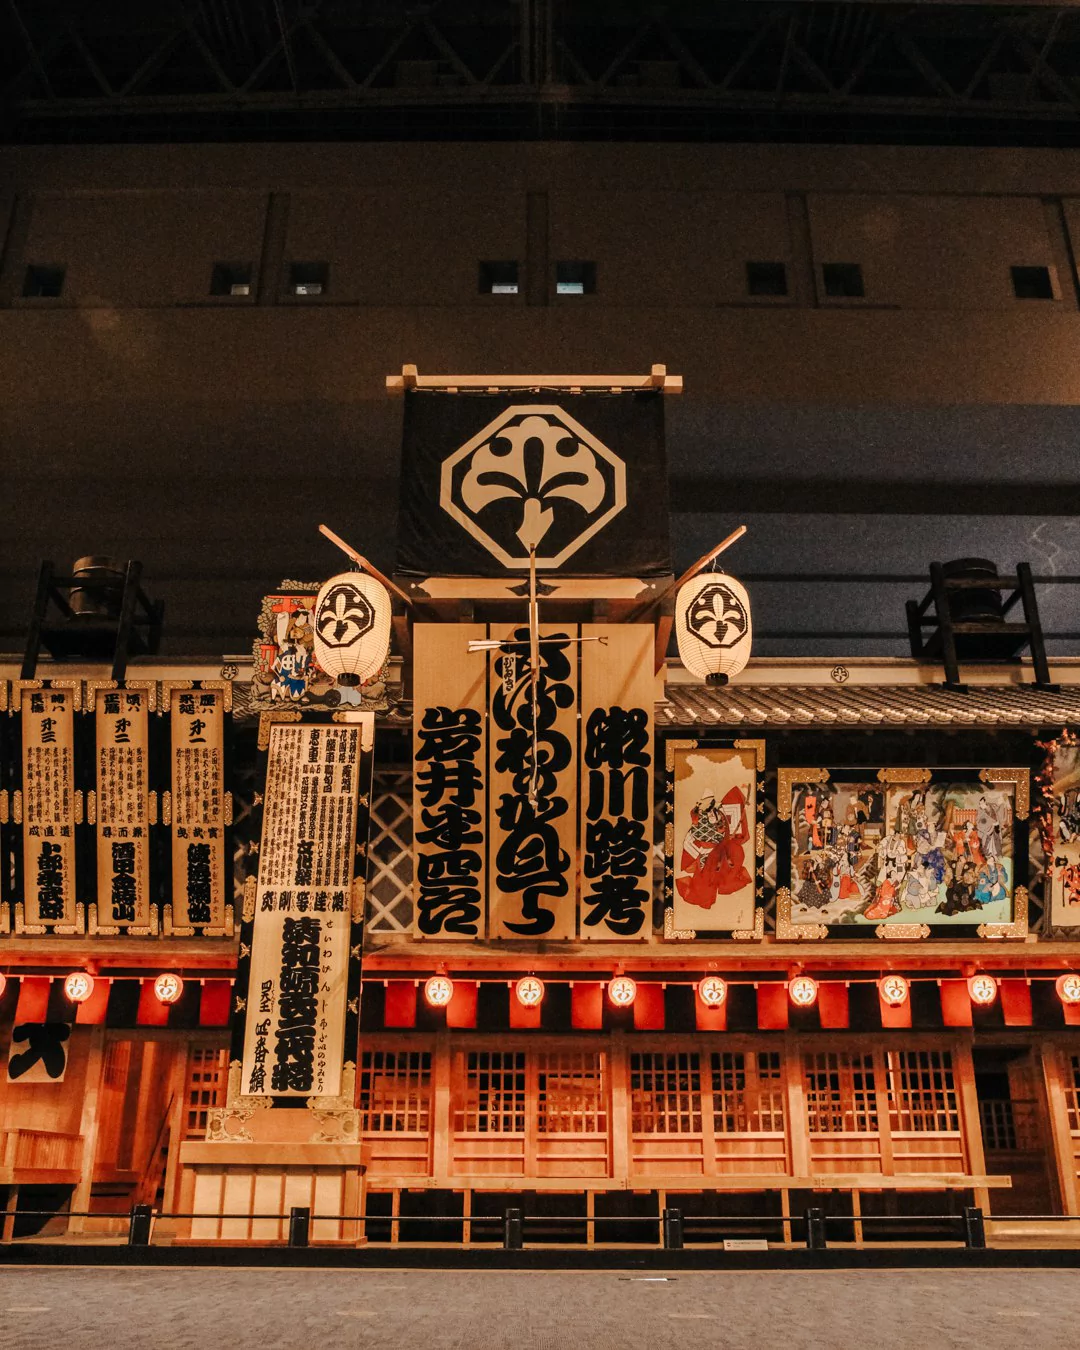 Explore the Edo-Tokyo Museum